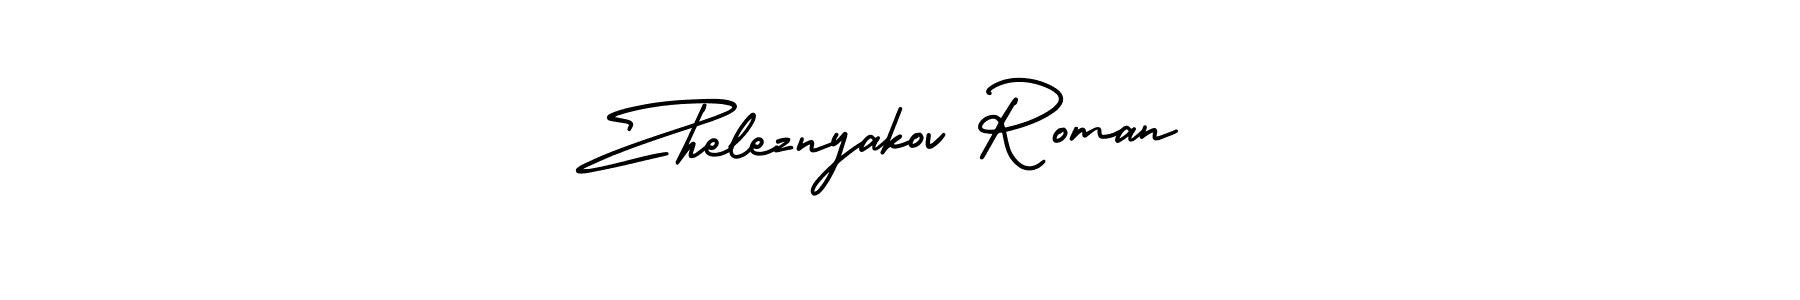 How to Draw Zheleznyakov Roman signature style? AmerikaSignatureDemo-Regular is a latest design signature styles for name Zheleznyakov Roman. Zheleznyakov Roman signature style 3 images and pictures png